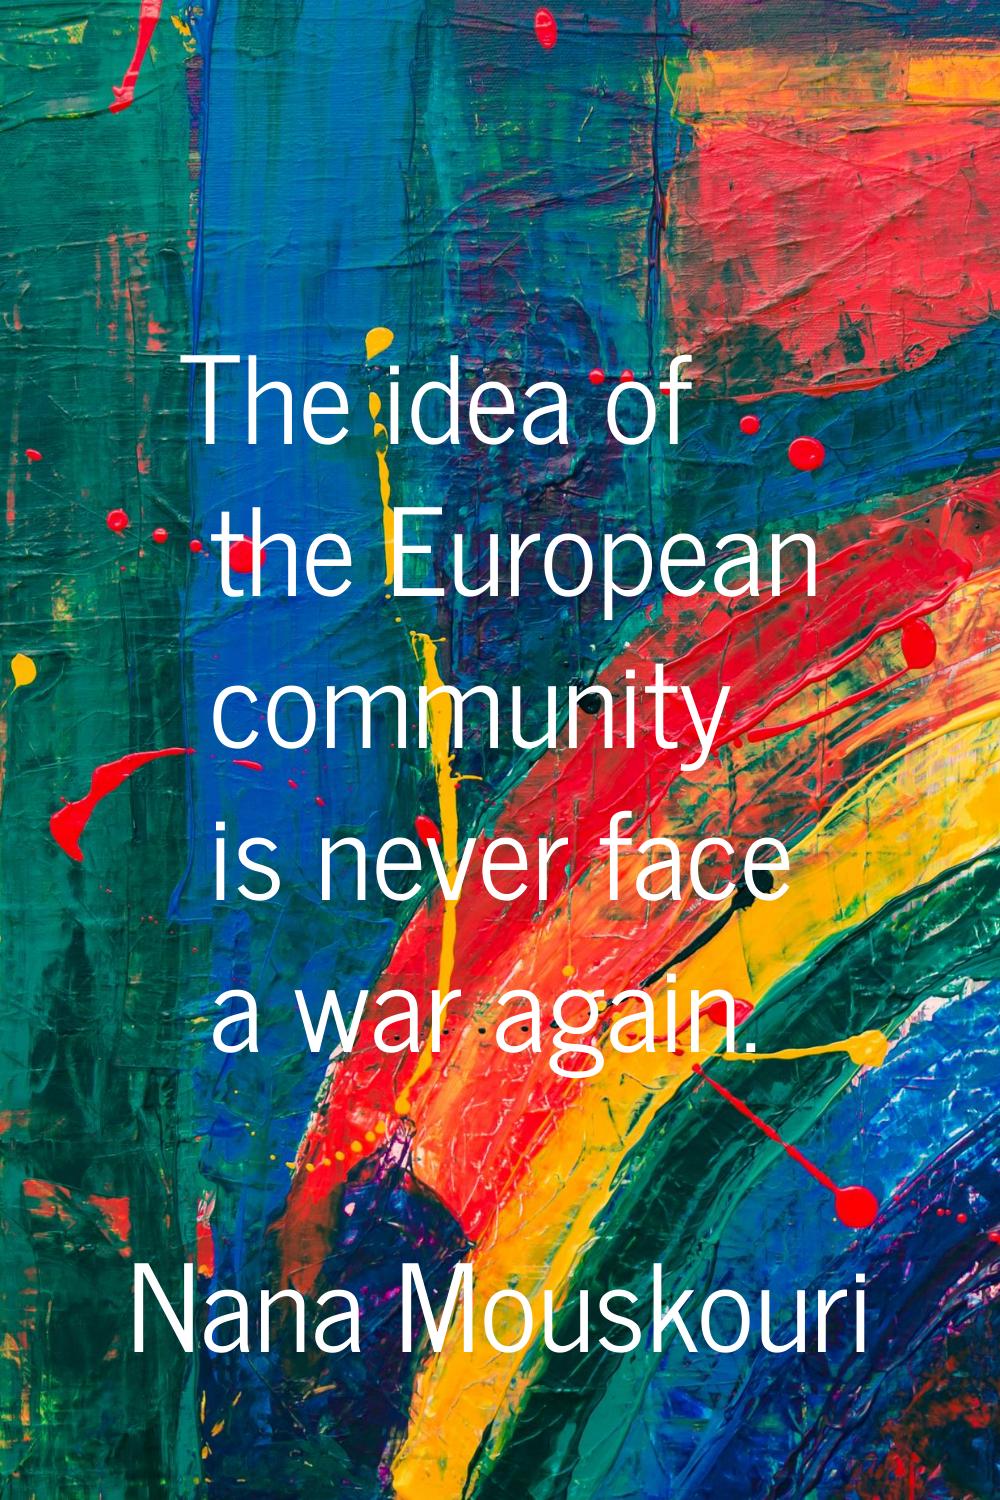 The idea of the European community is never face a war again.